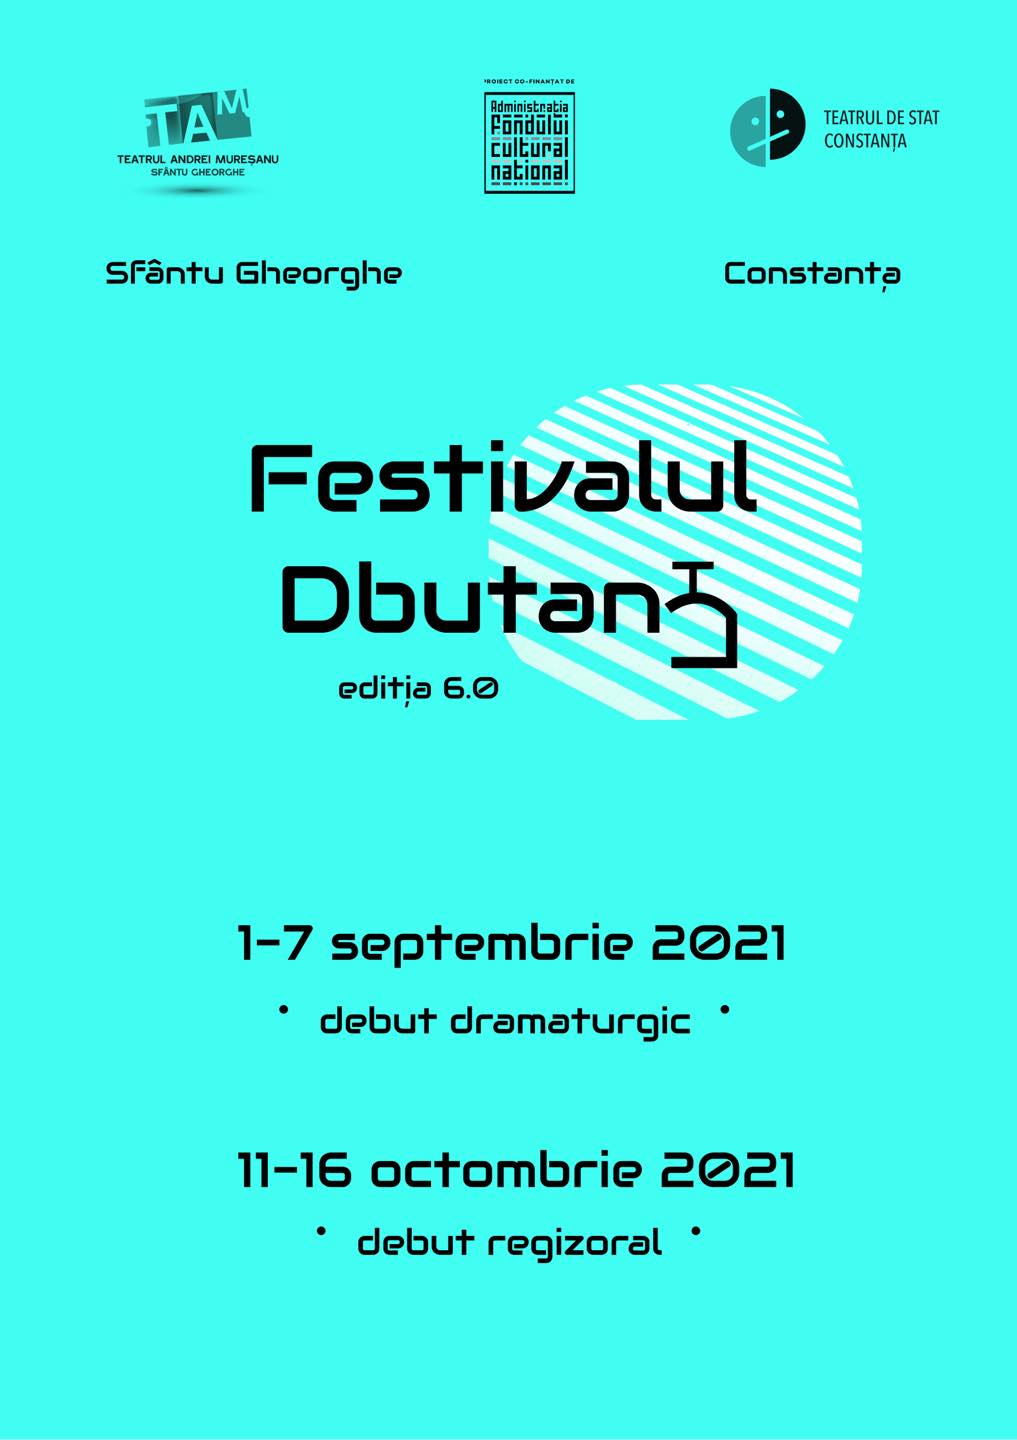  DbutanT Festival